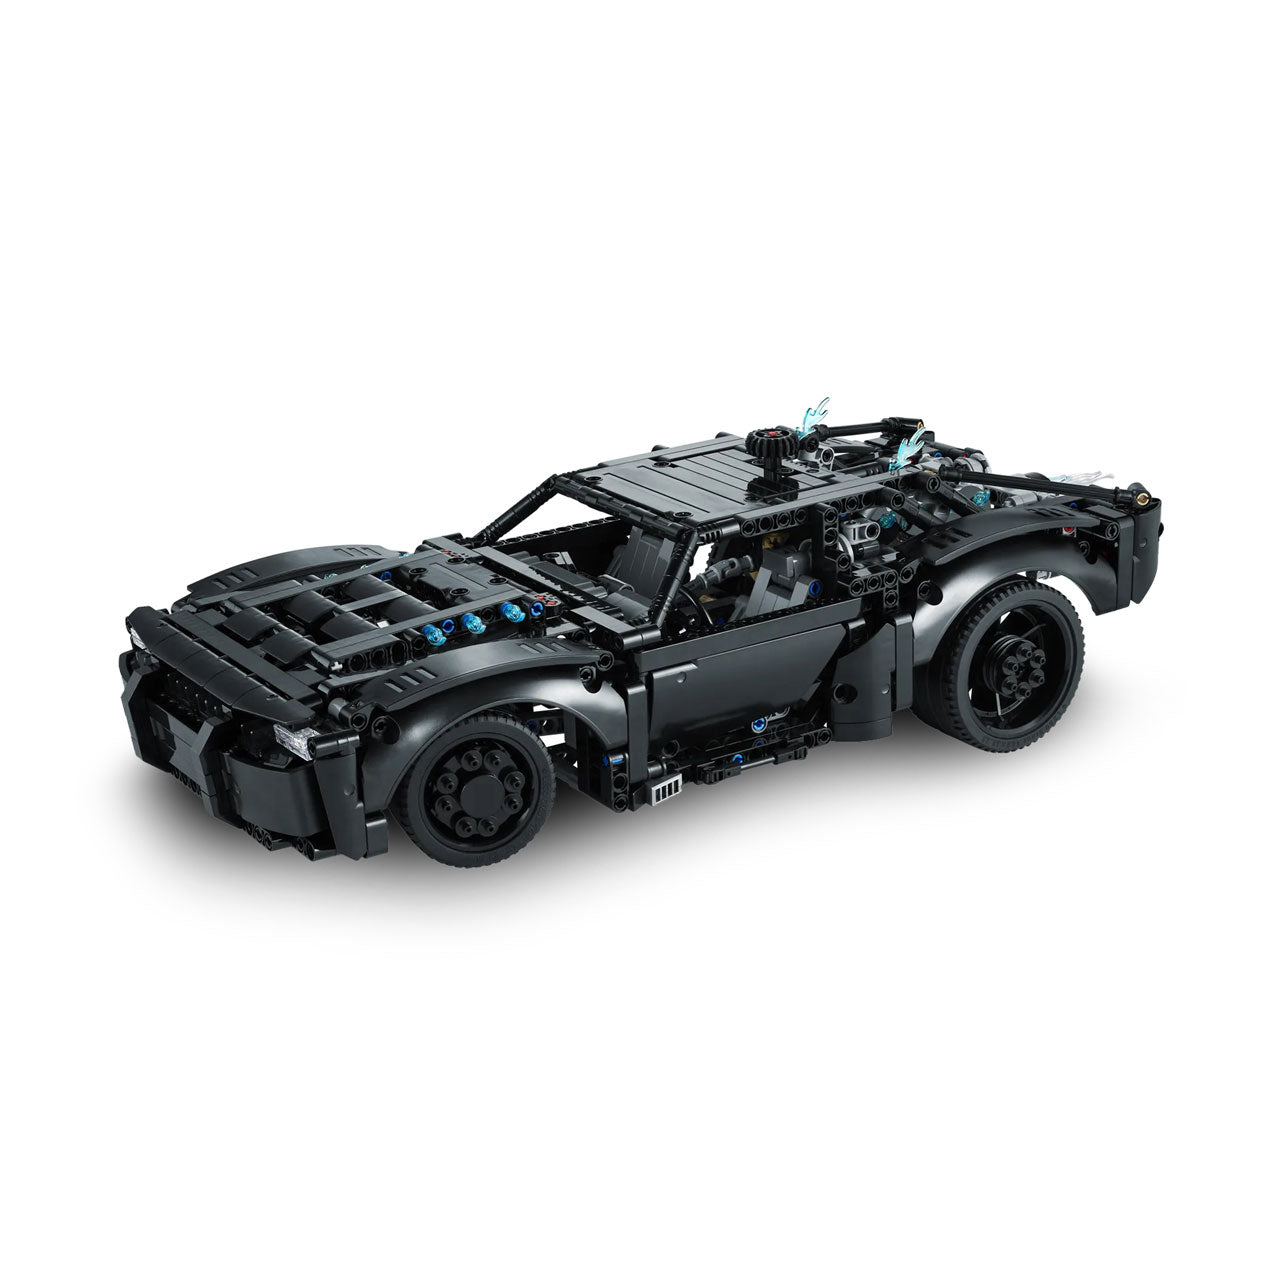 1360-Piece Lego Technic Batmobile Looks Ahead to 2022 Movie 'The